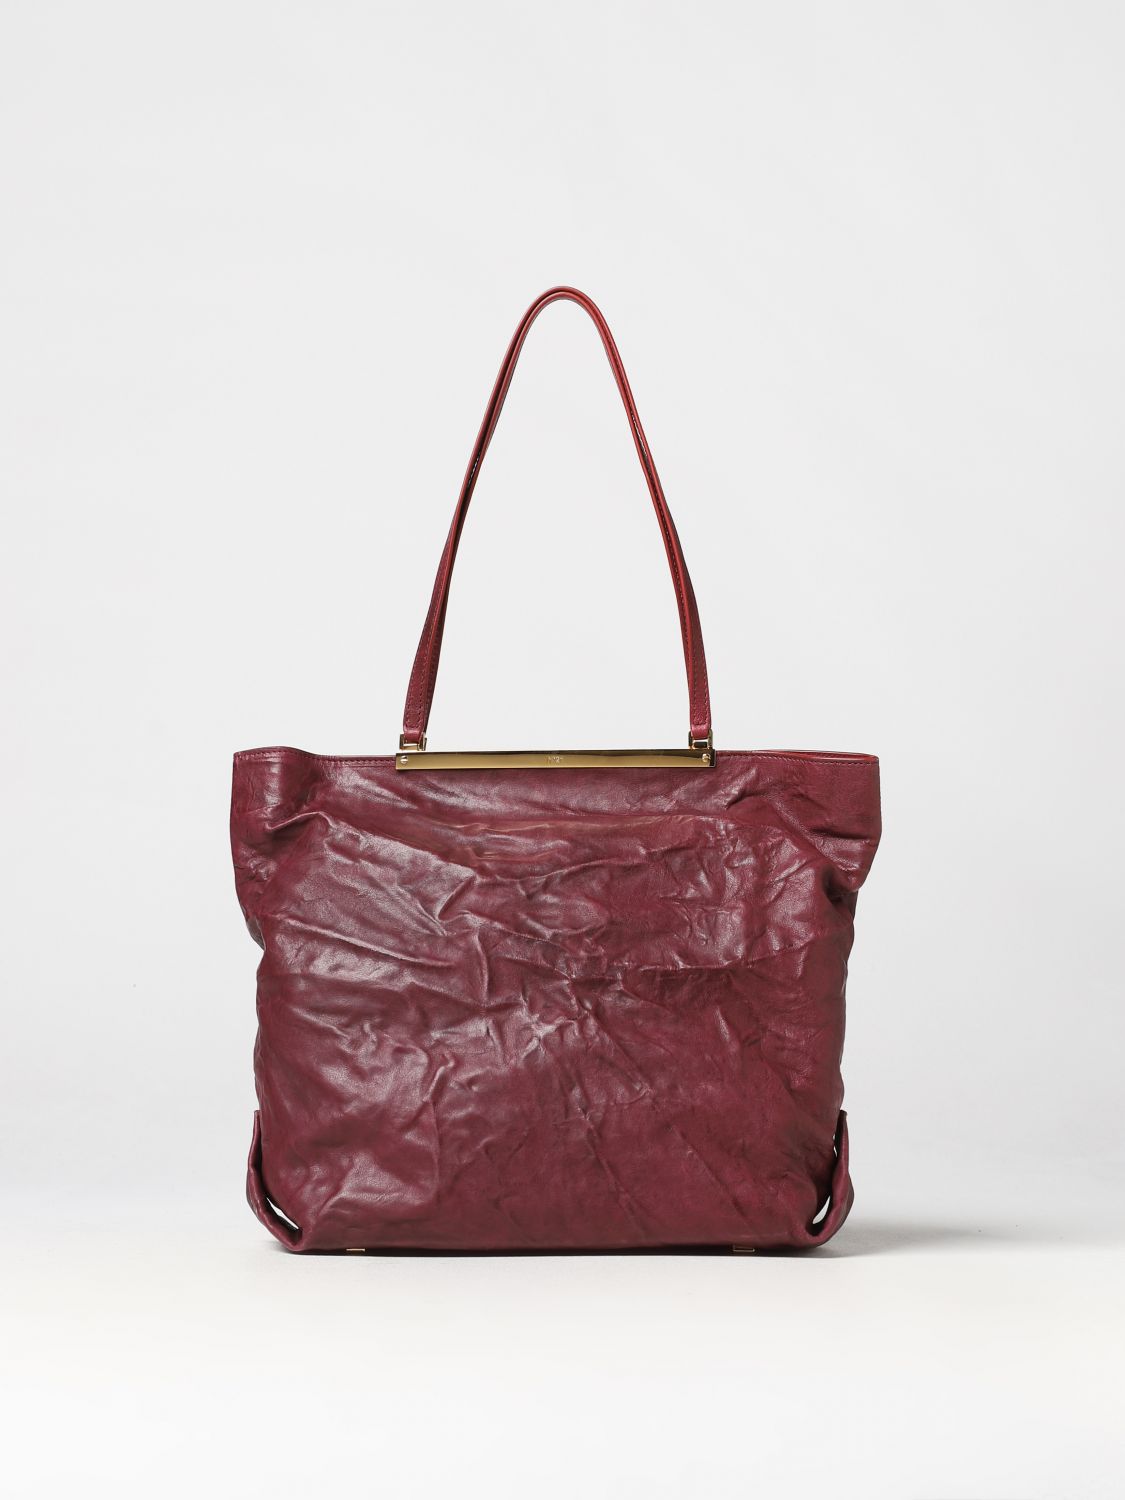 N°21 Barrette Bag In Wrinkled Leather In Burgundy